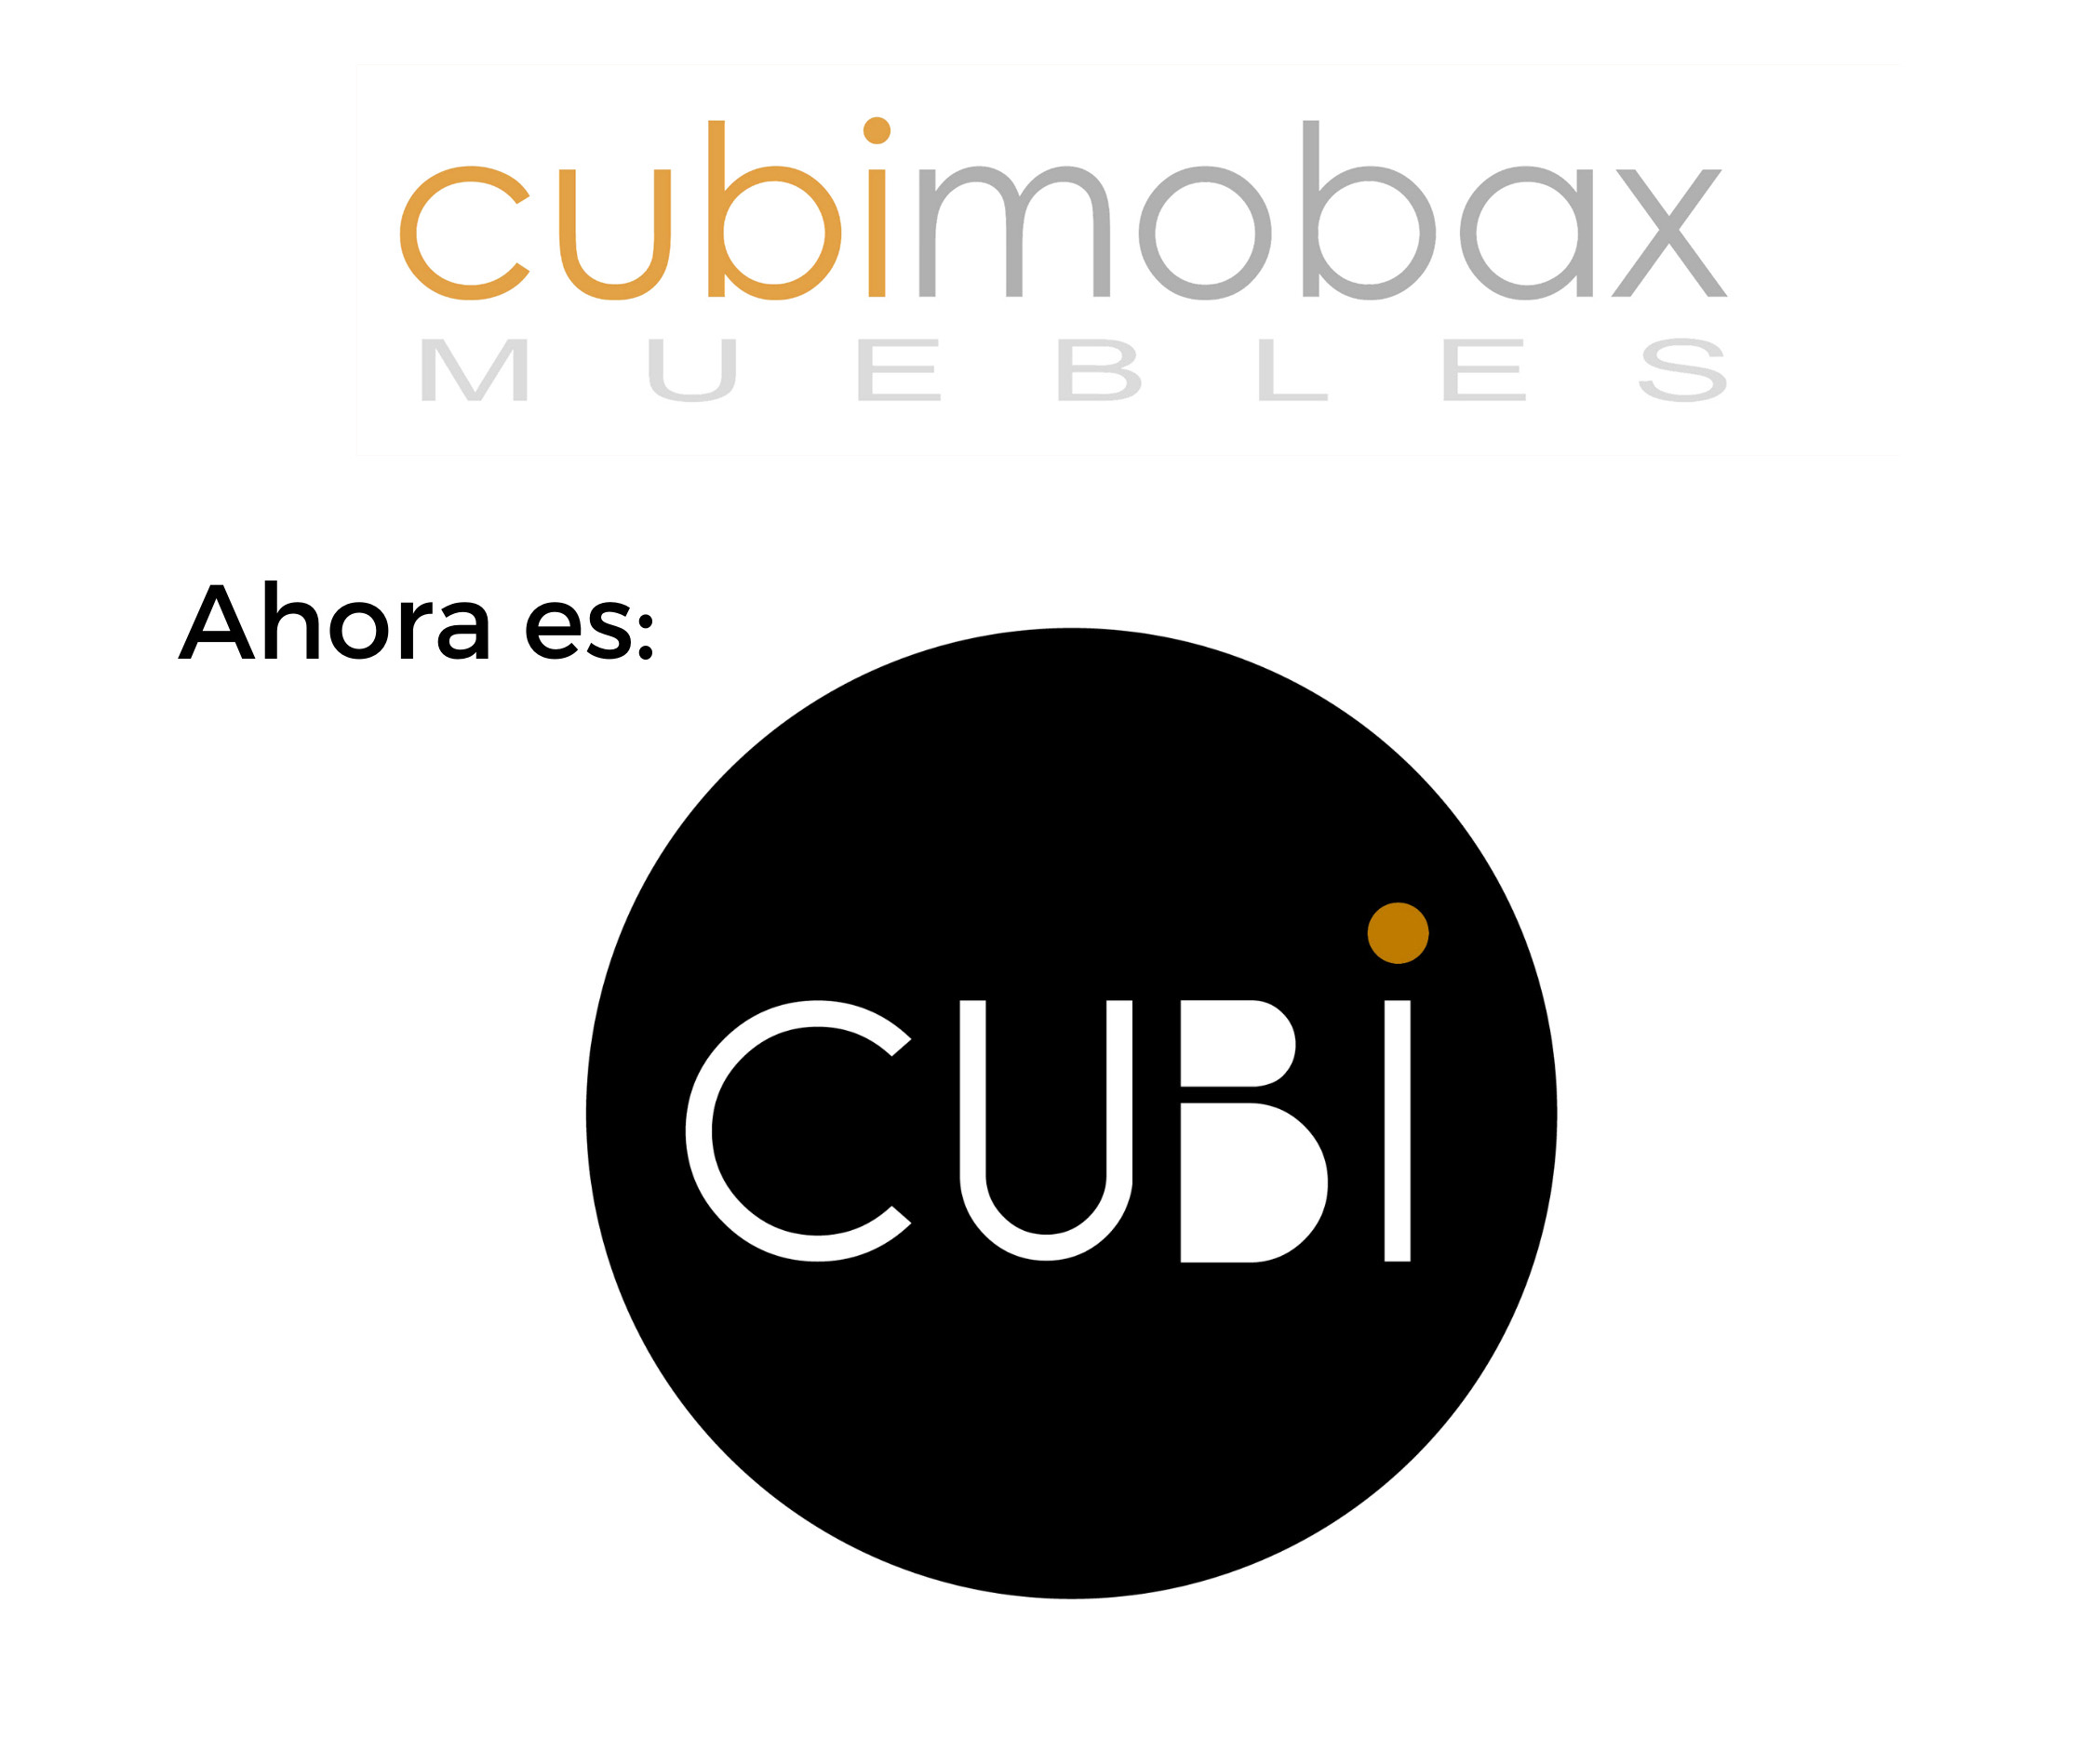 Cubi, antes Cubimobax